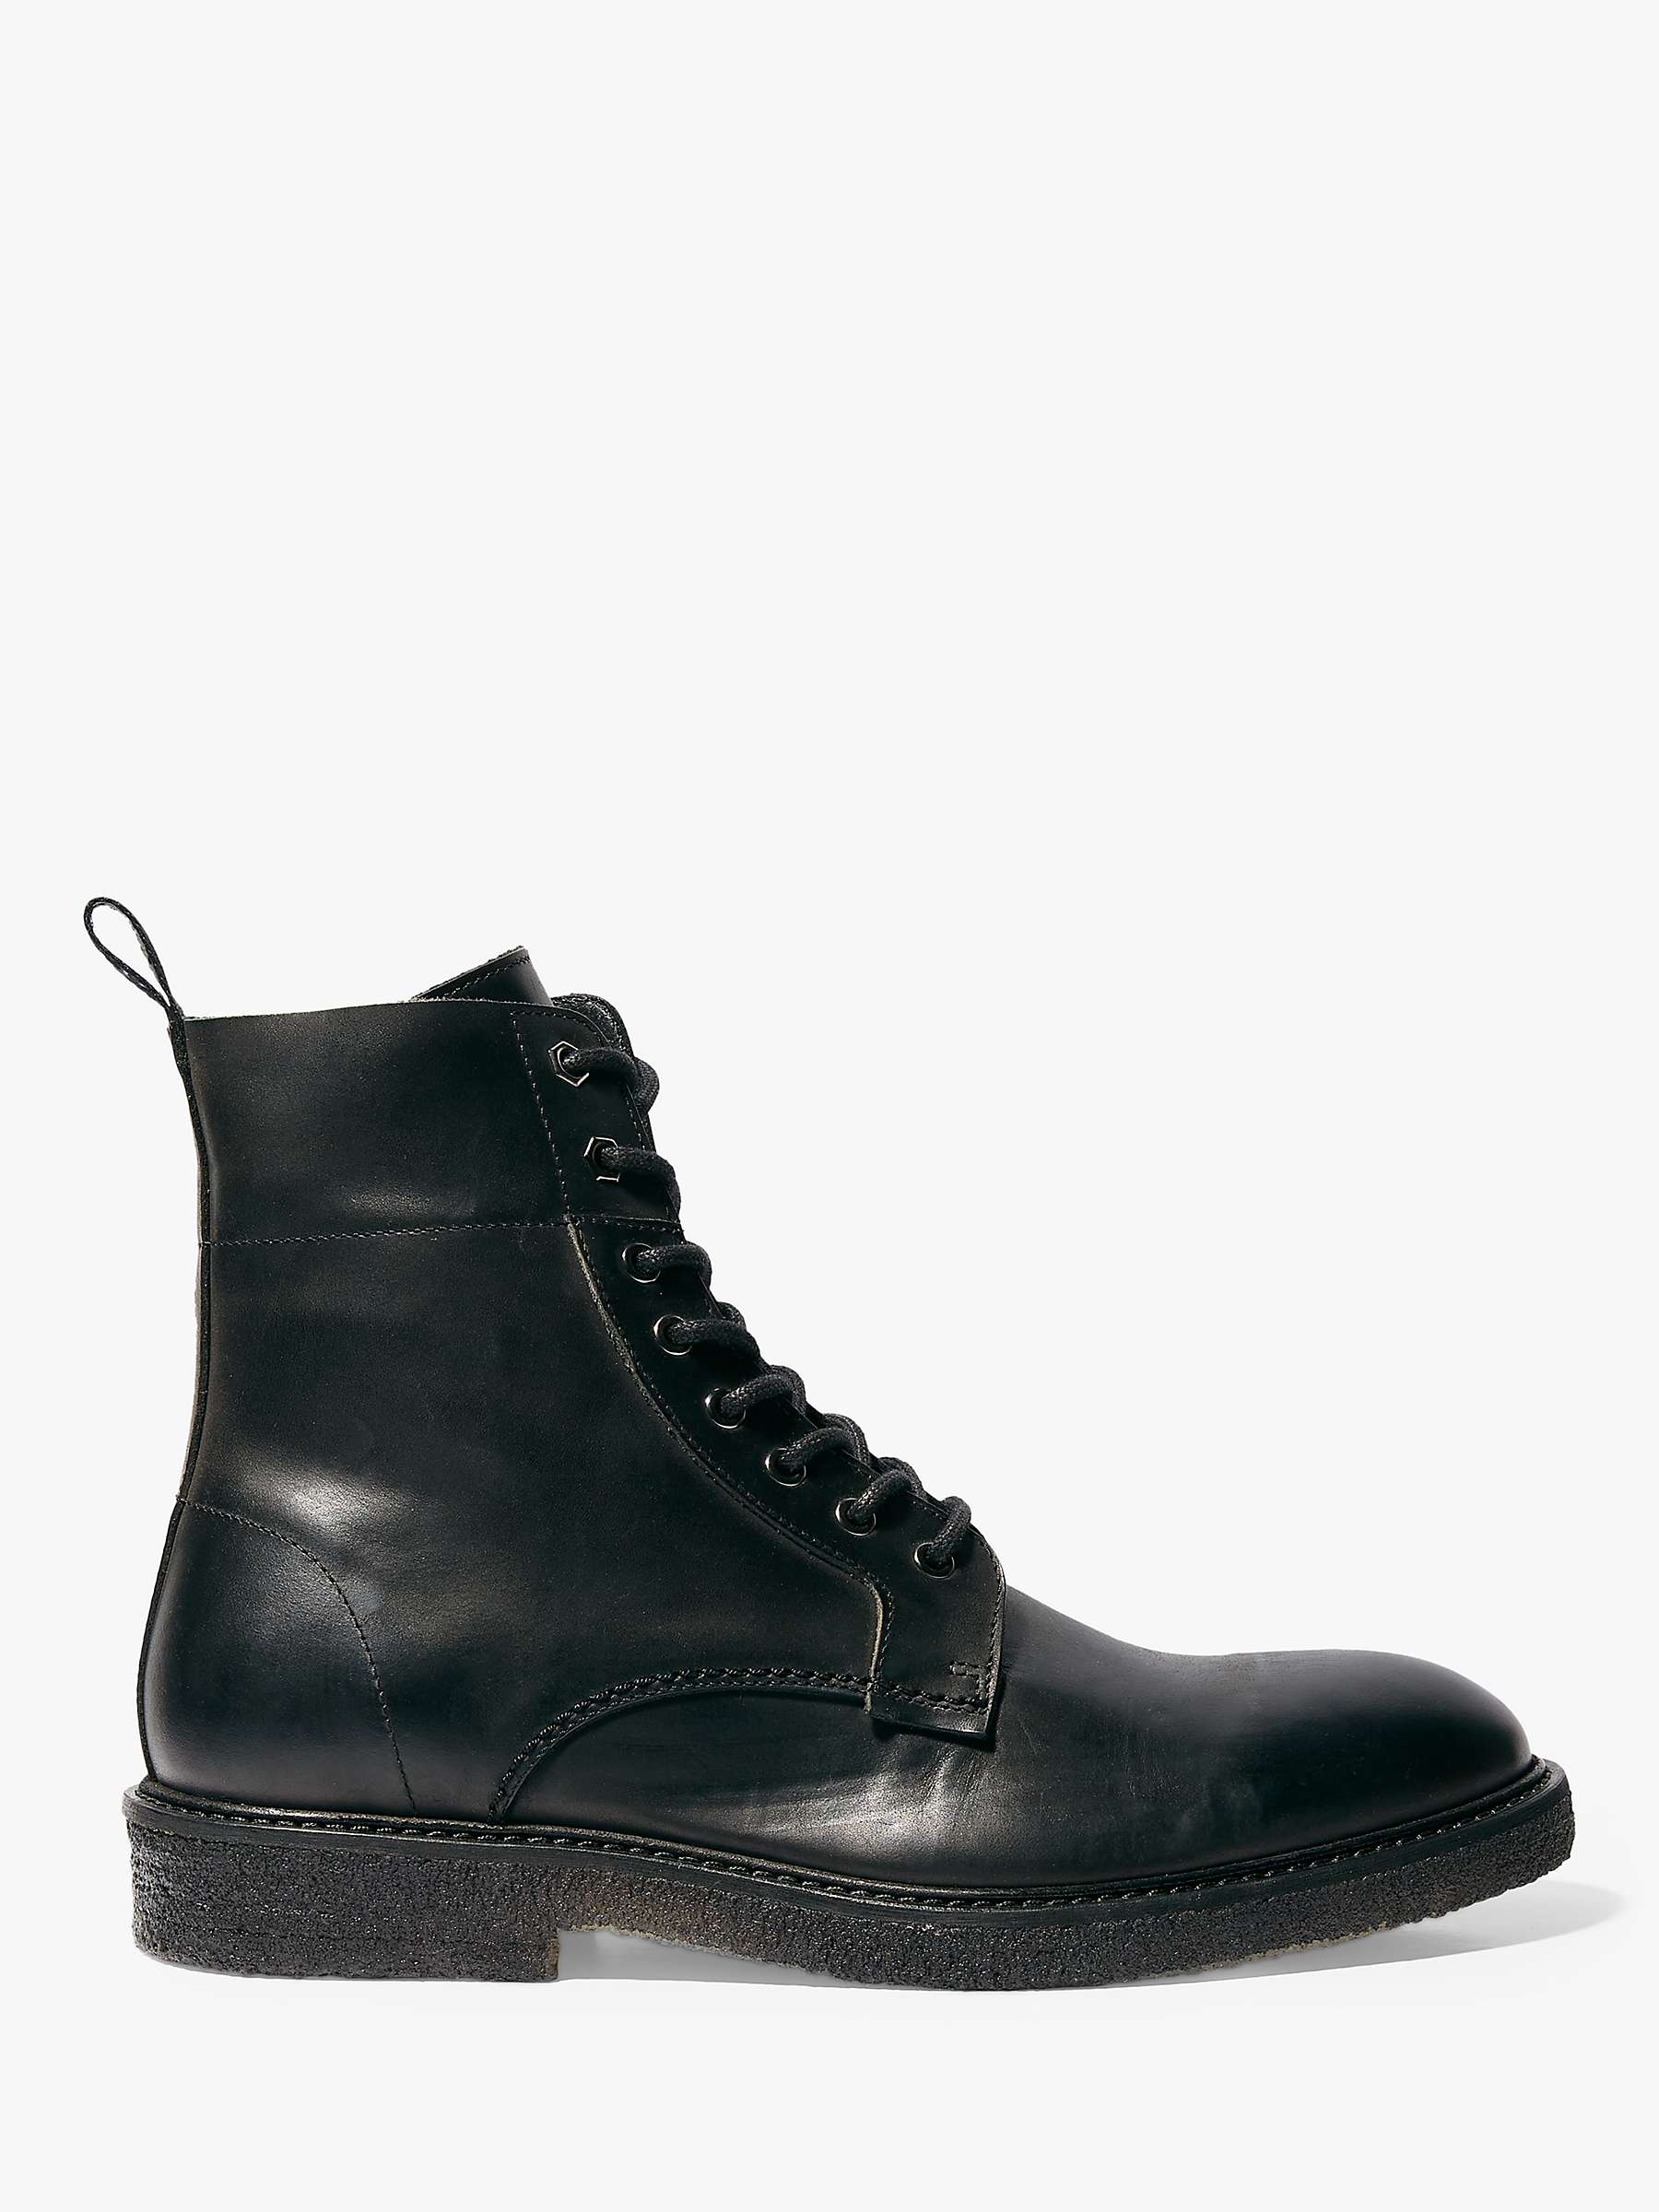 AllSaints Elden Leather Boots, Black at John Lewis & Partners